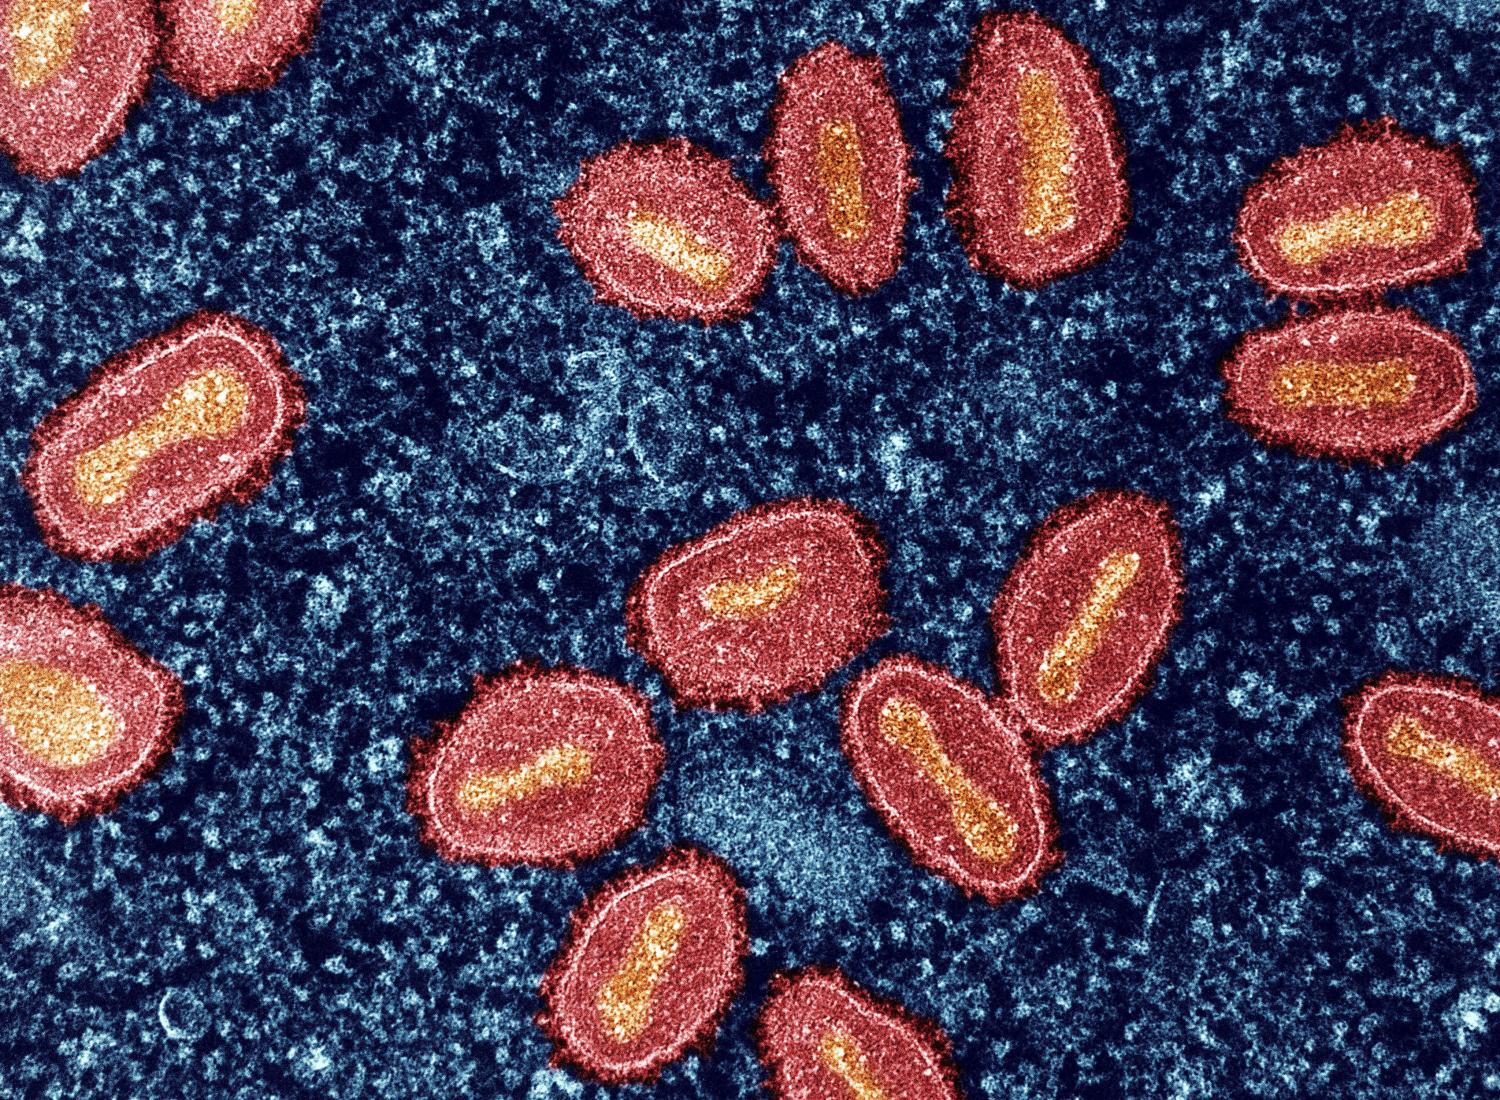 mpox virus